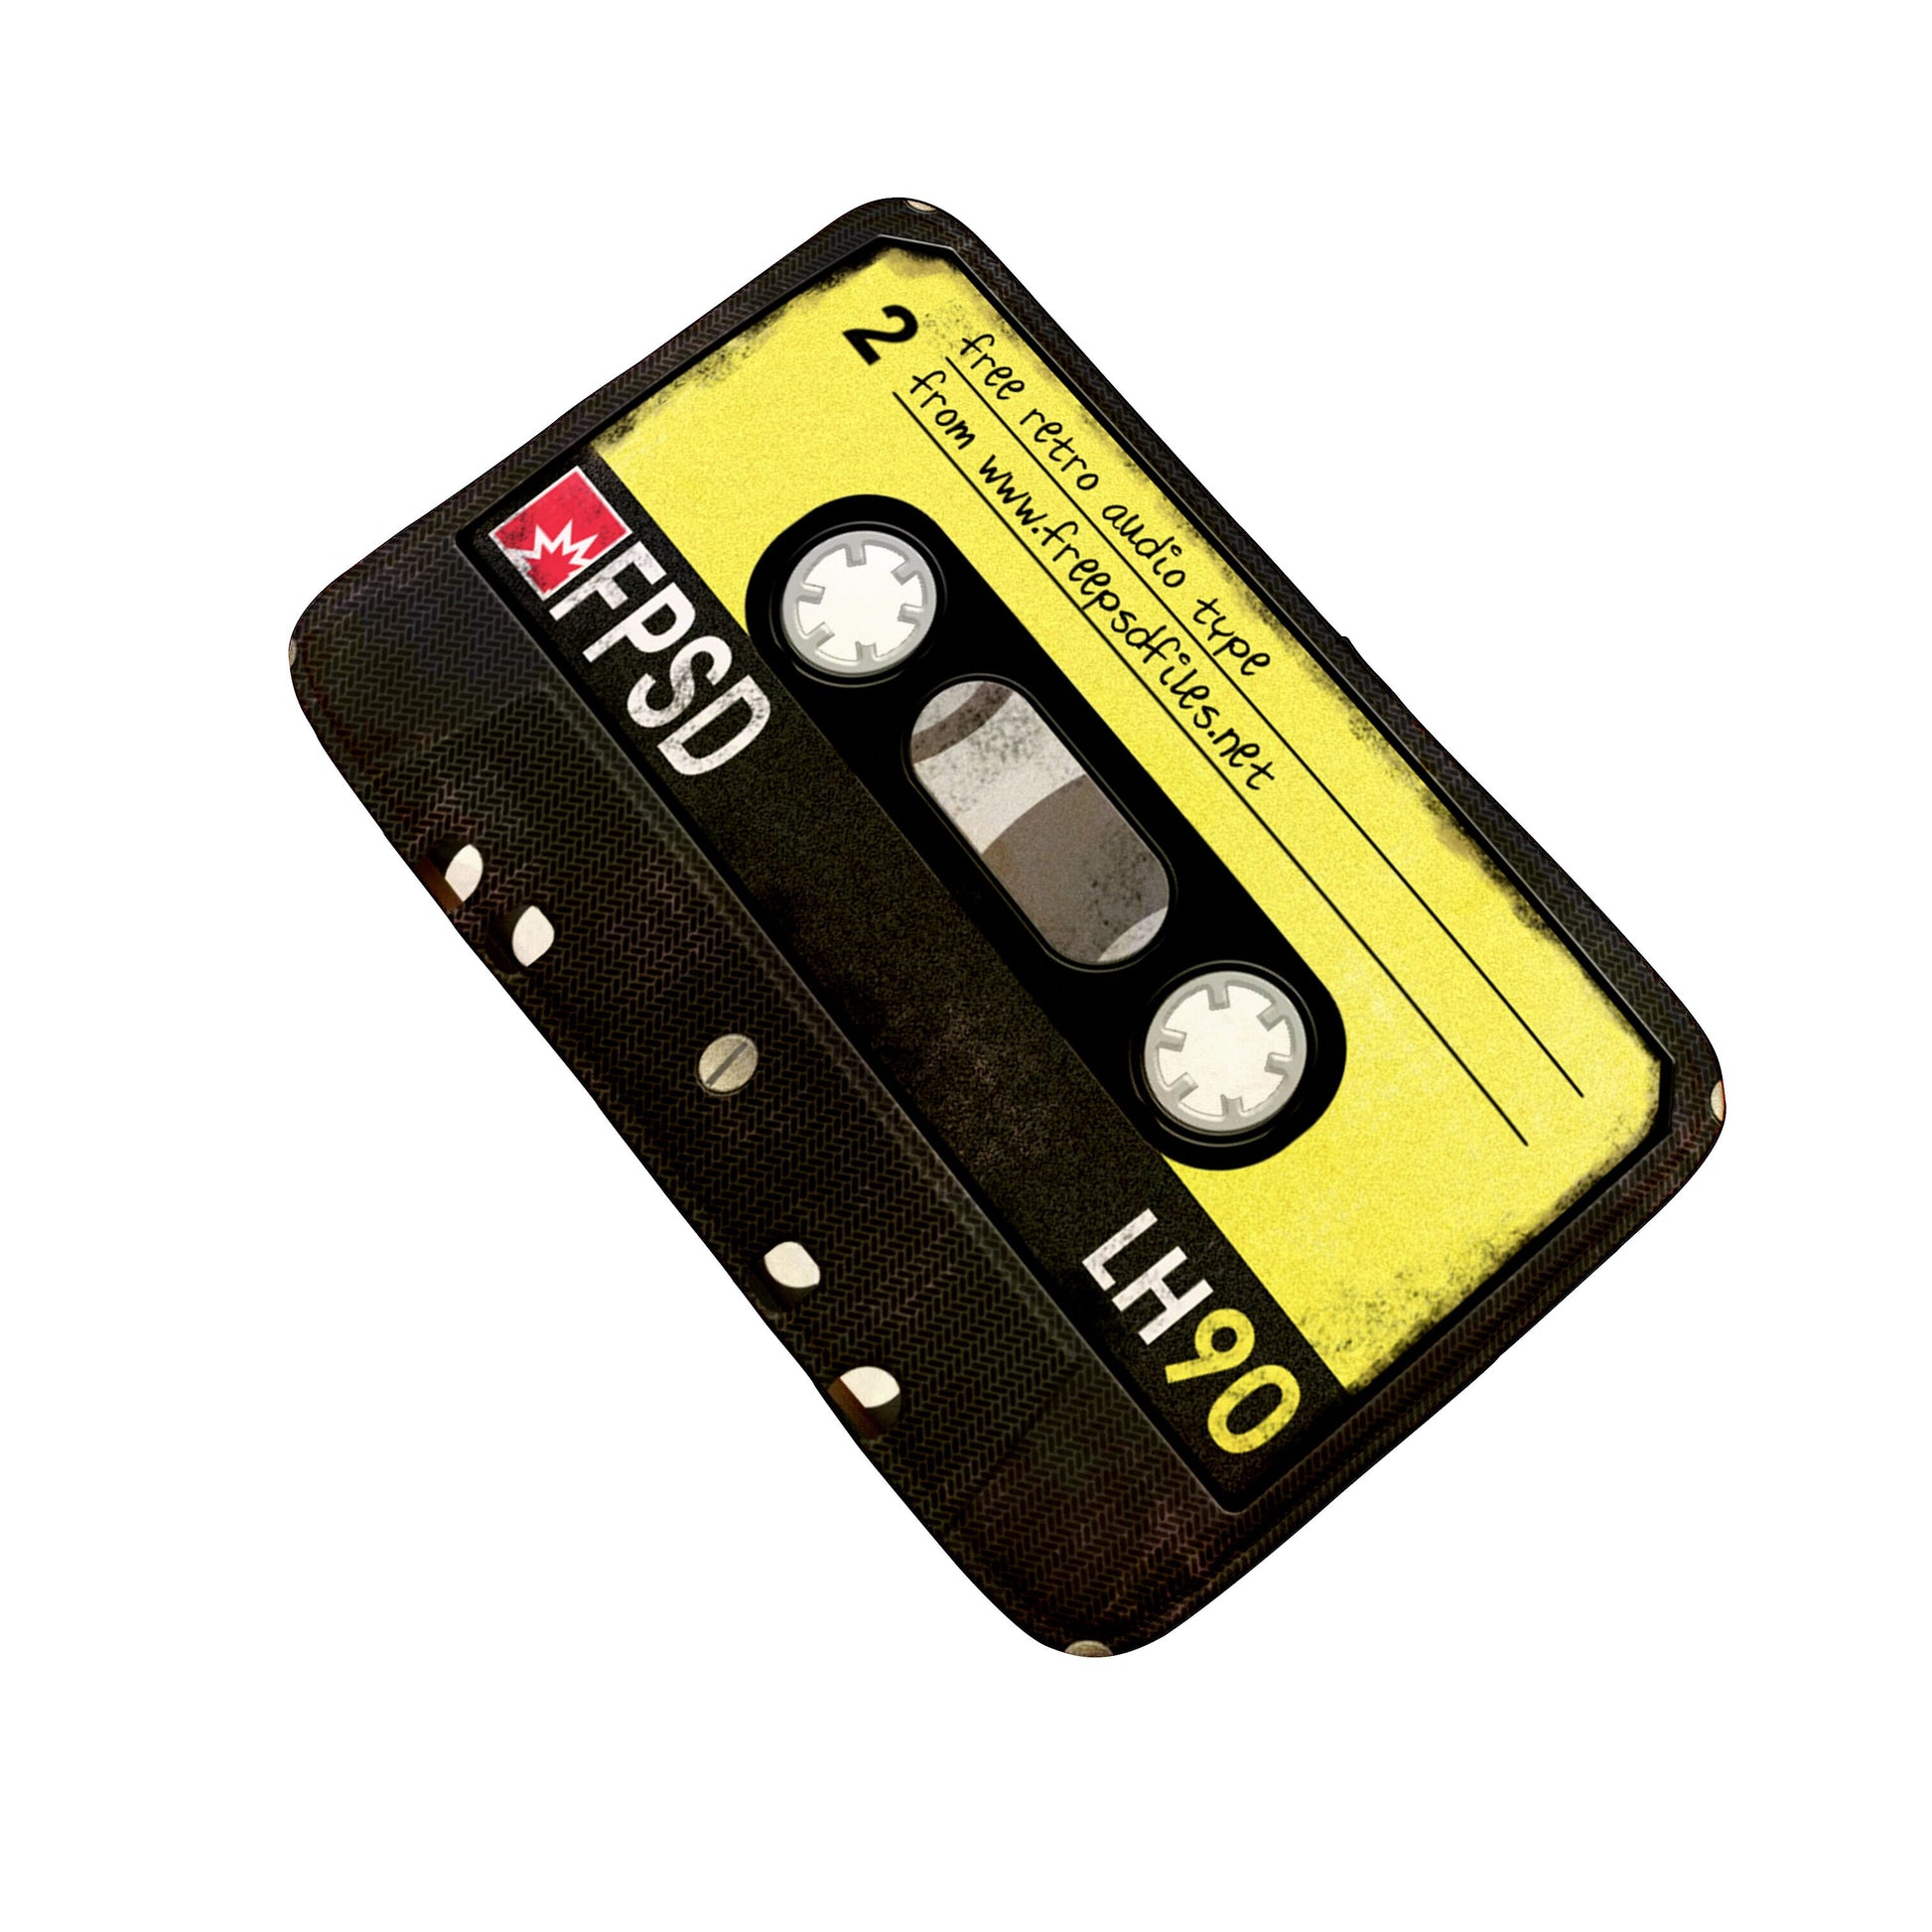 TEEK - A Bunch of Cassette Tape Rugs HOME DECOR theteekdotcom 11 15.75x23.62in 20-25 days